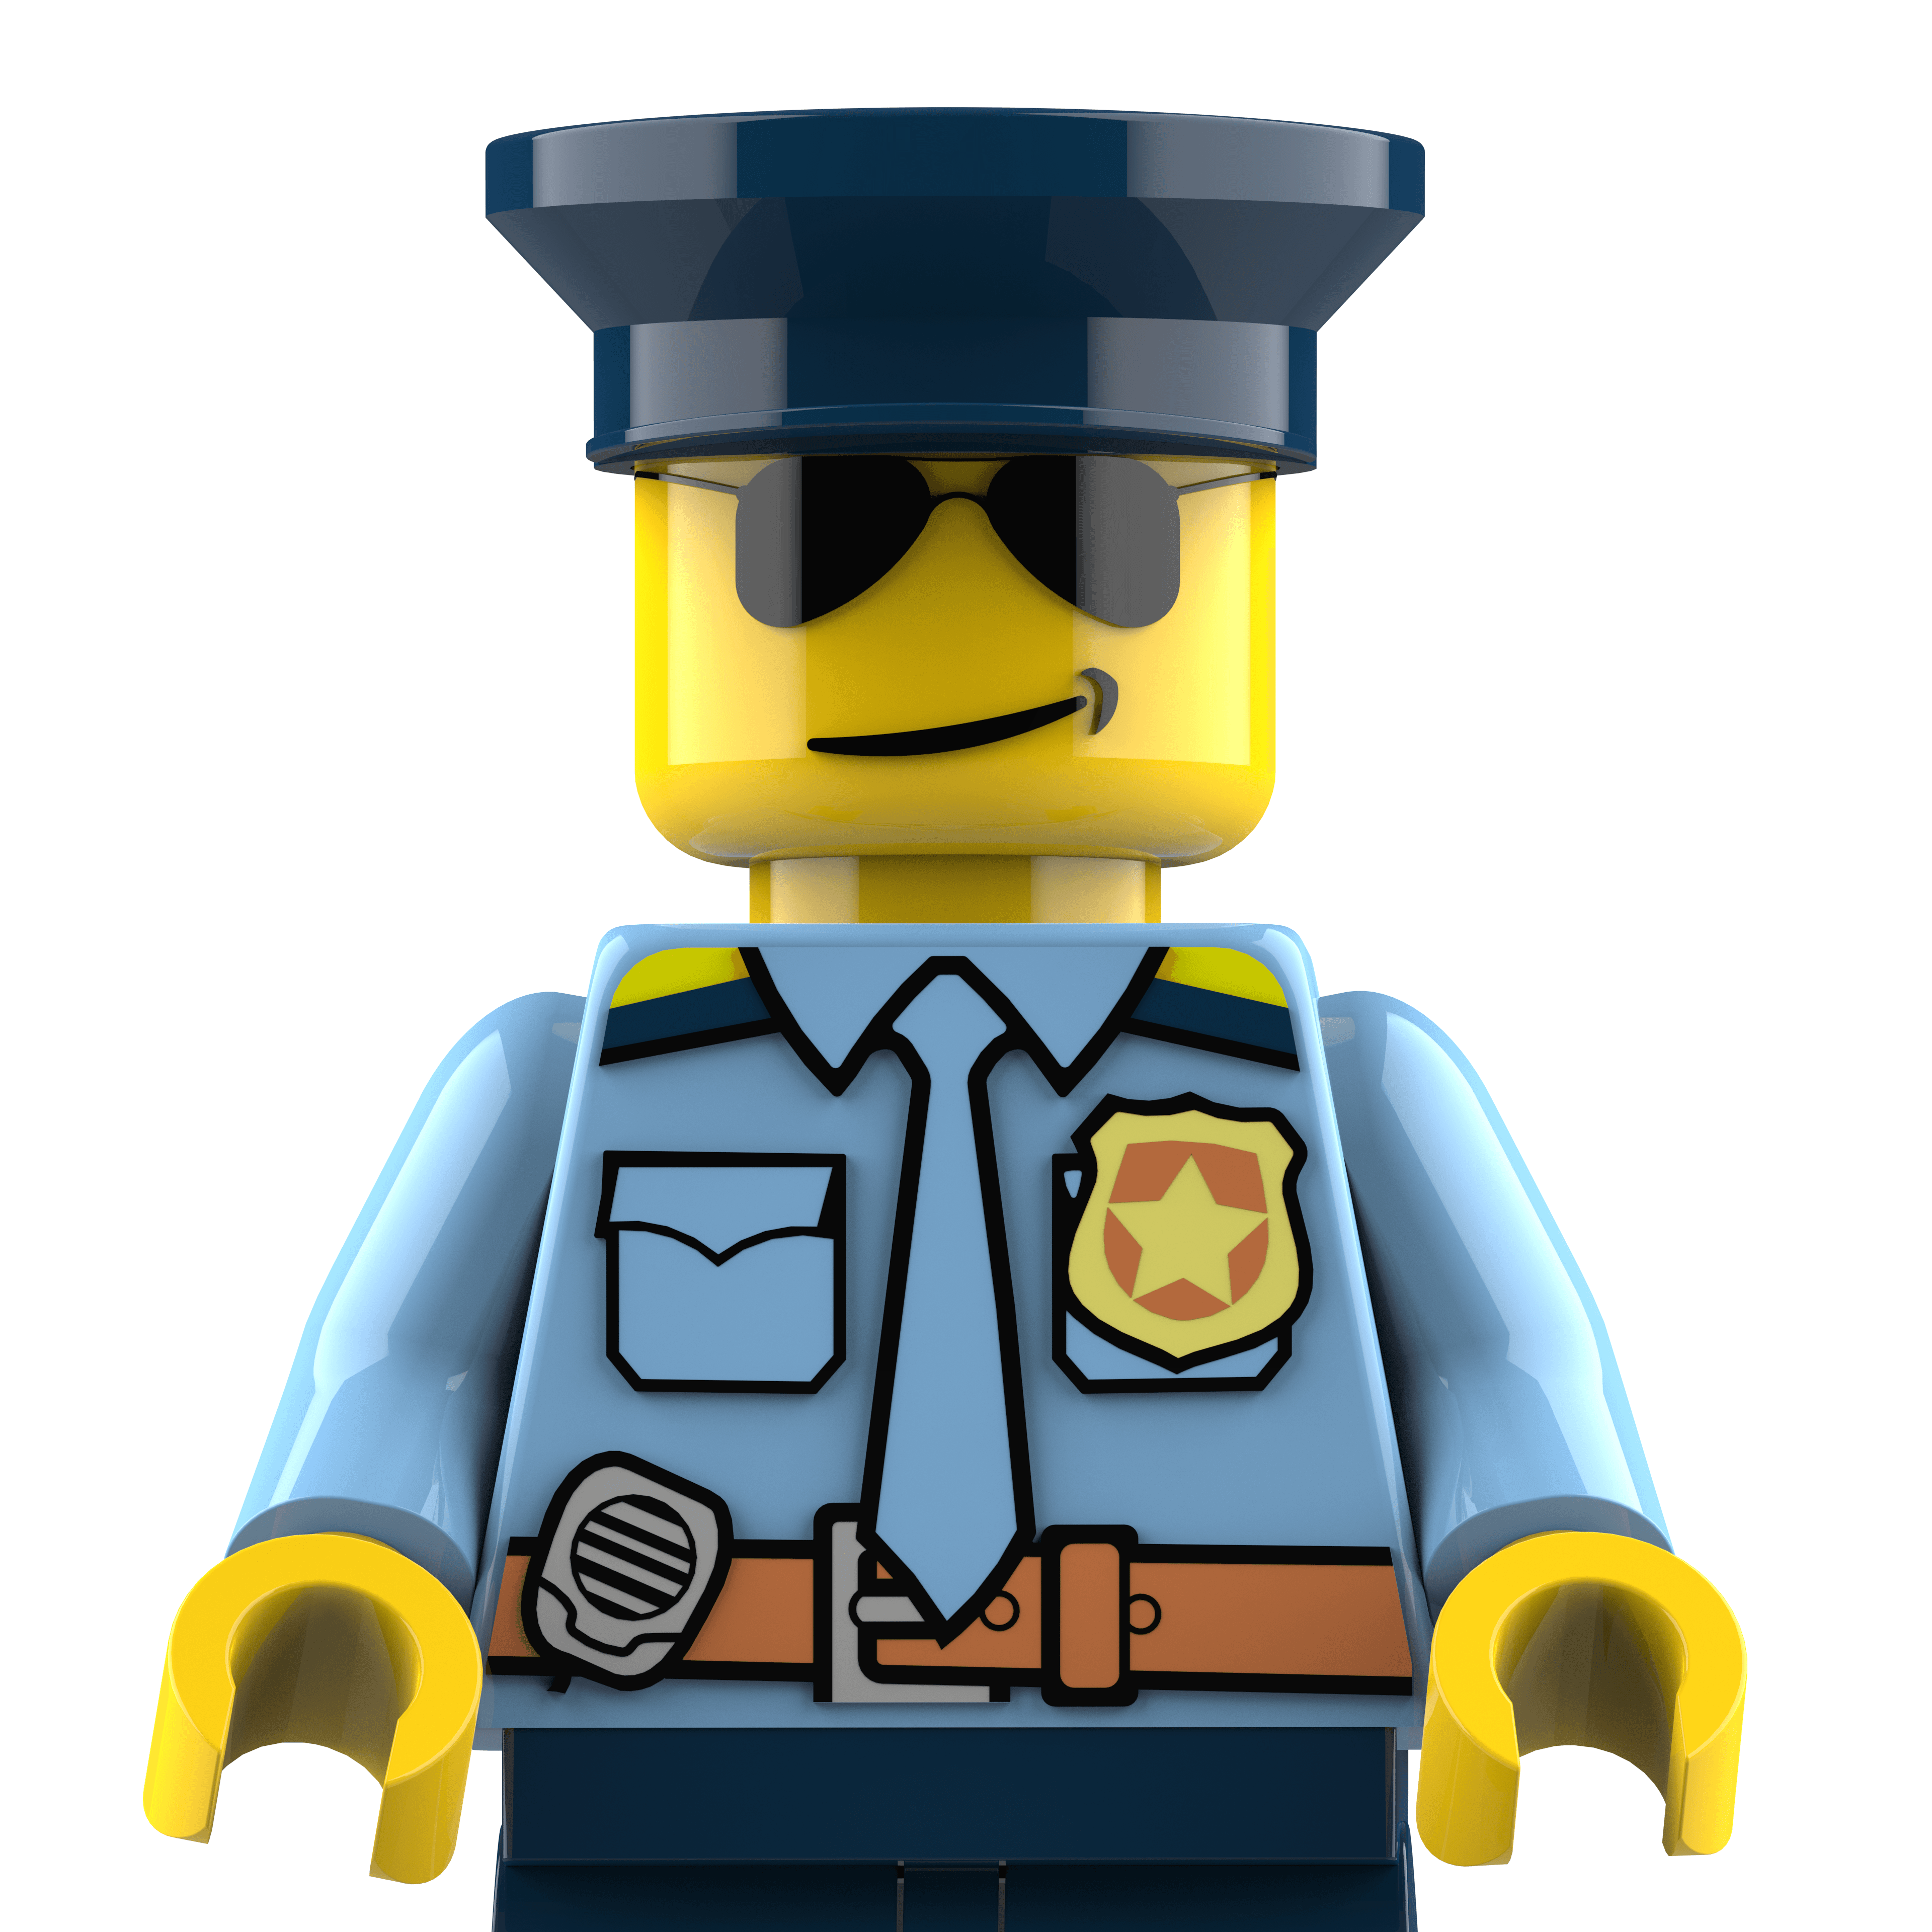 Lego Police Officer pack 3D model rigged